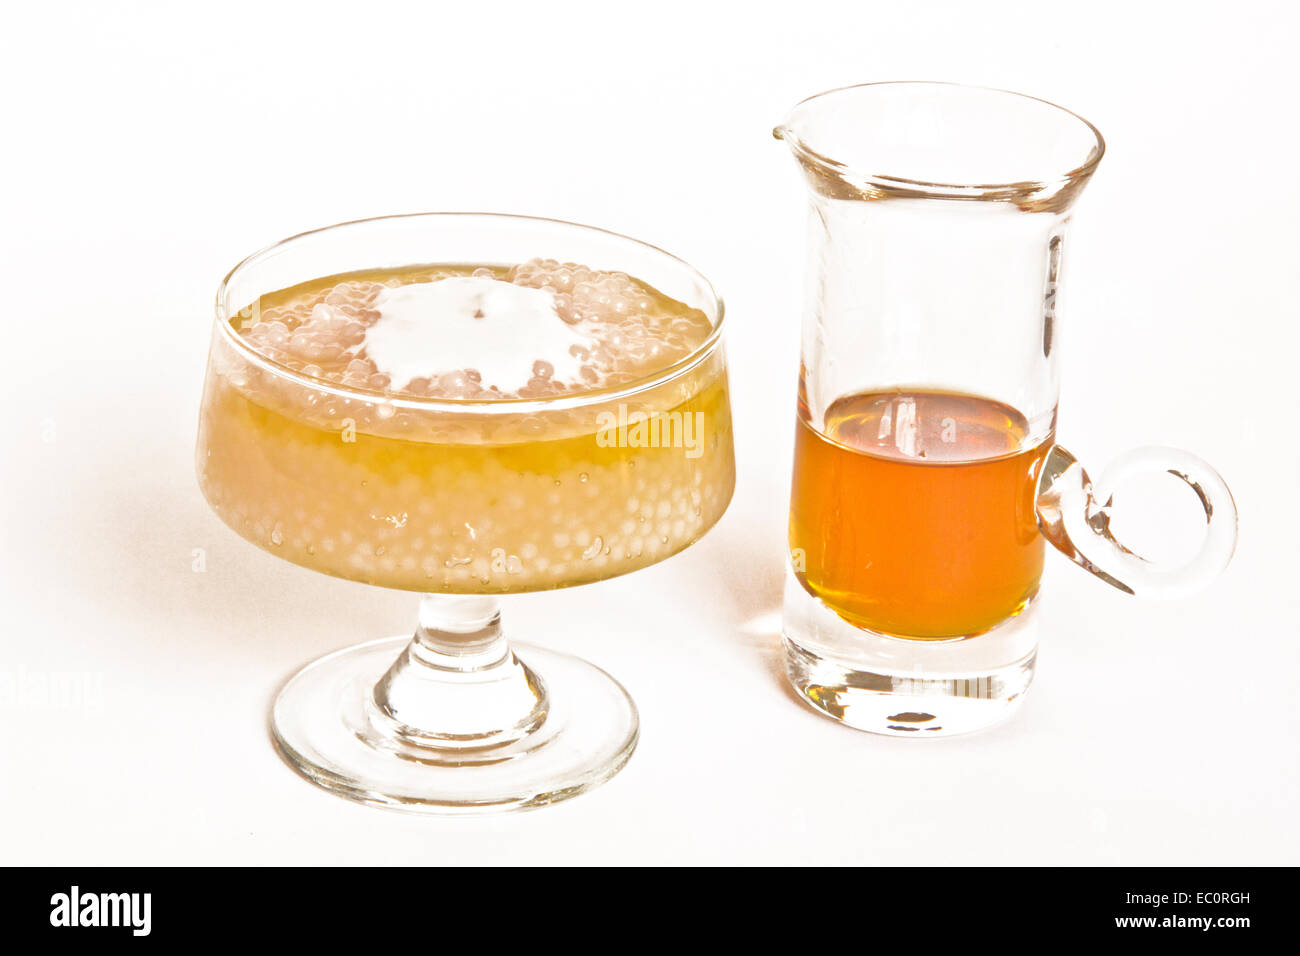 Gula Malacca, a Malaysian dessert with coconut cream in a glass dish and accompanying palm sugar syrup. Stock Photo